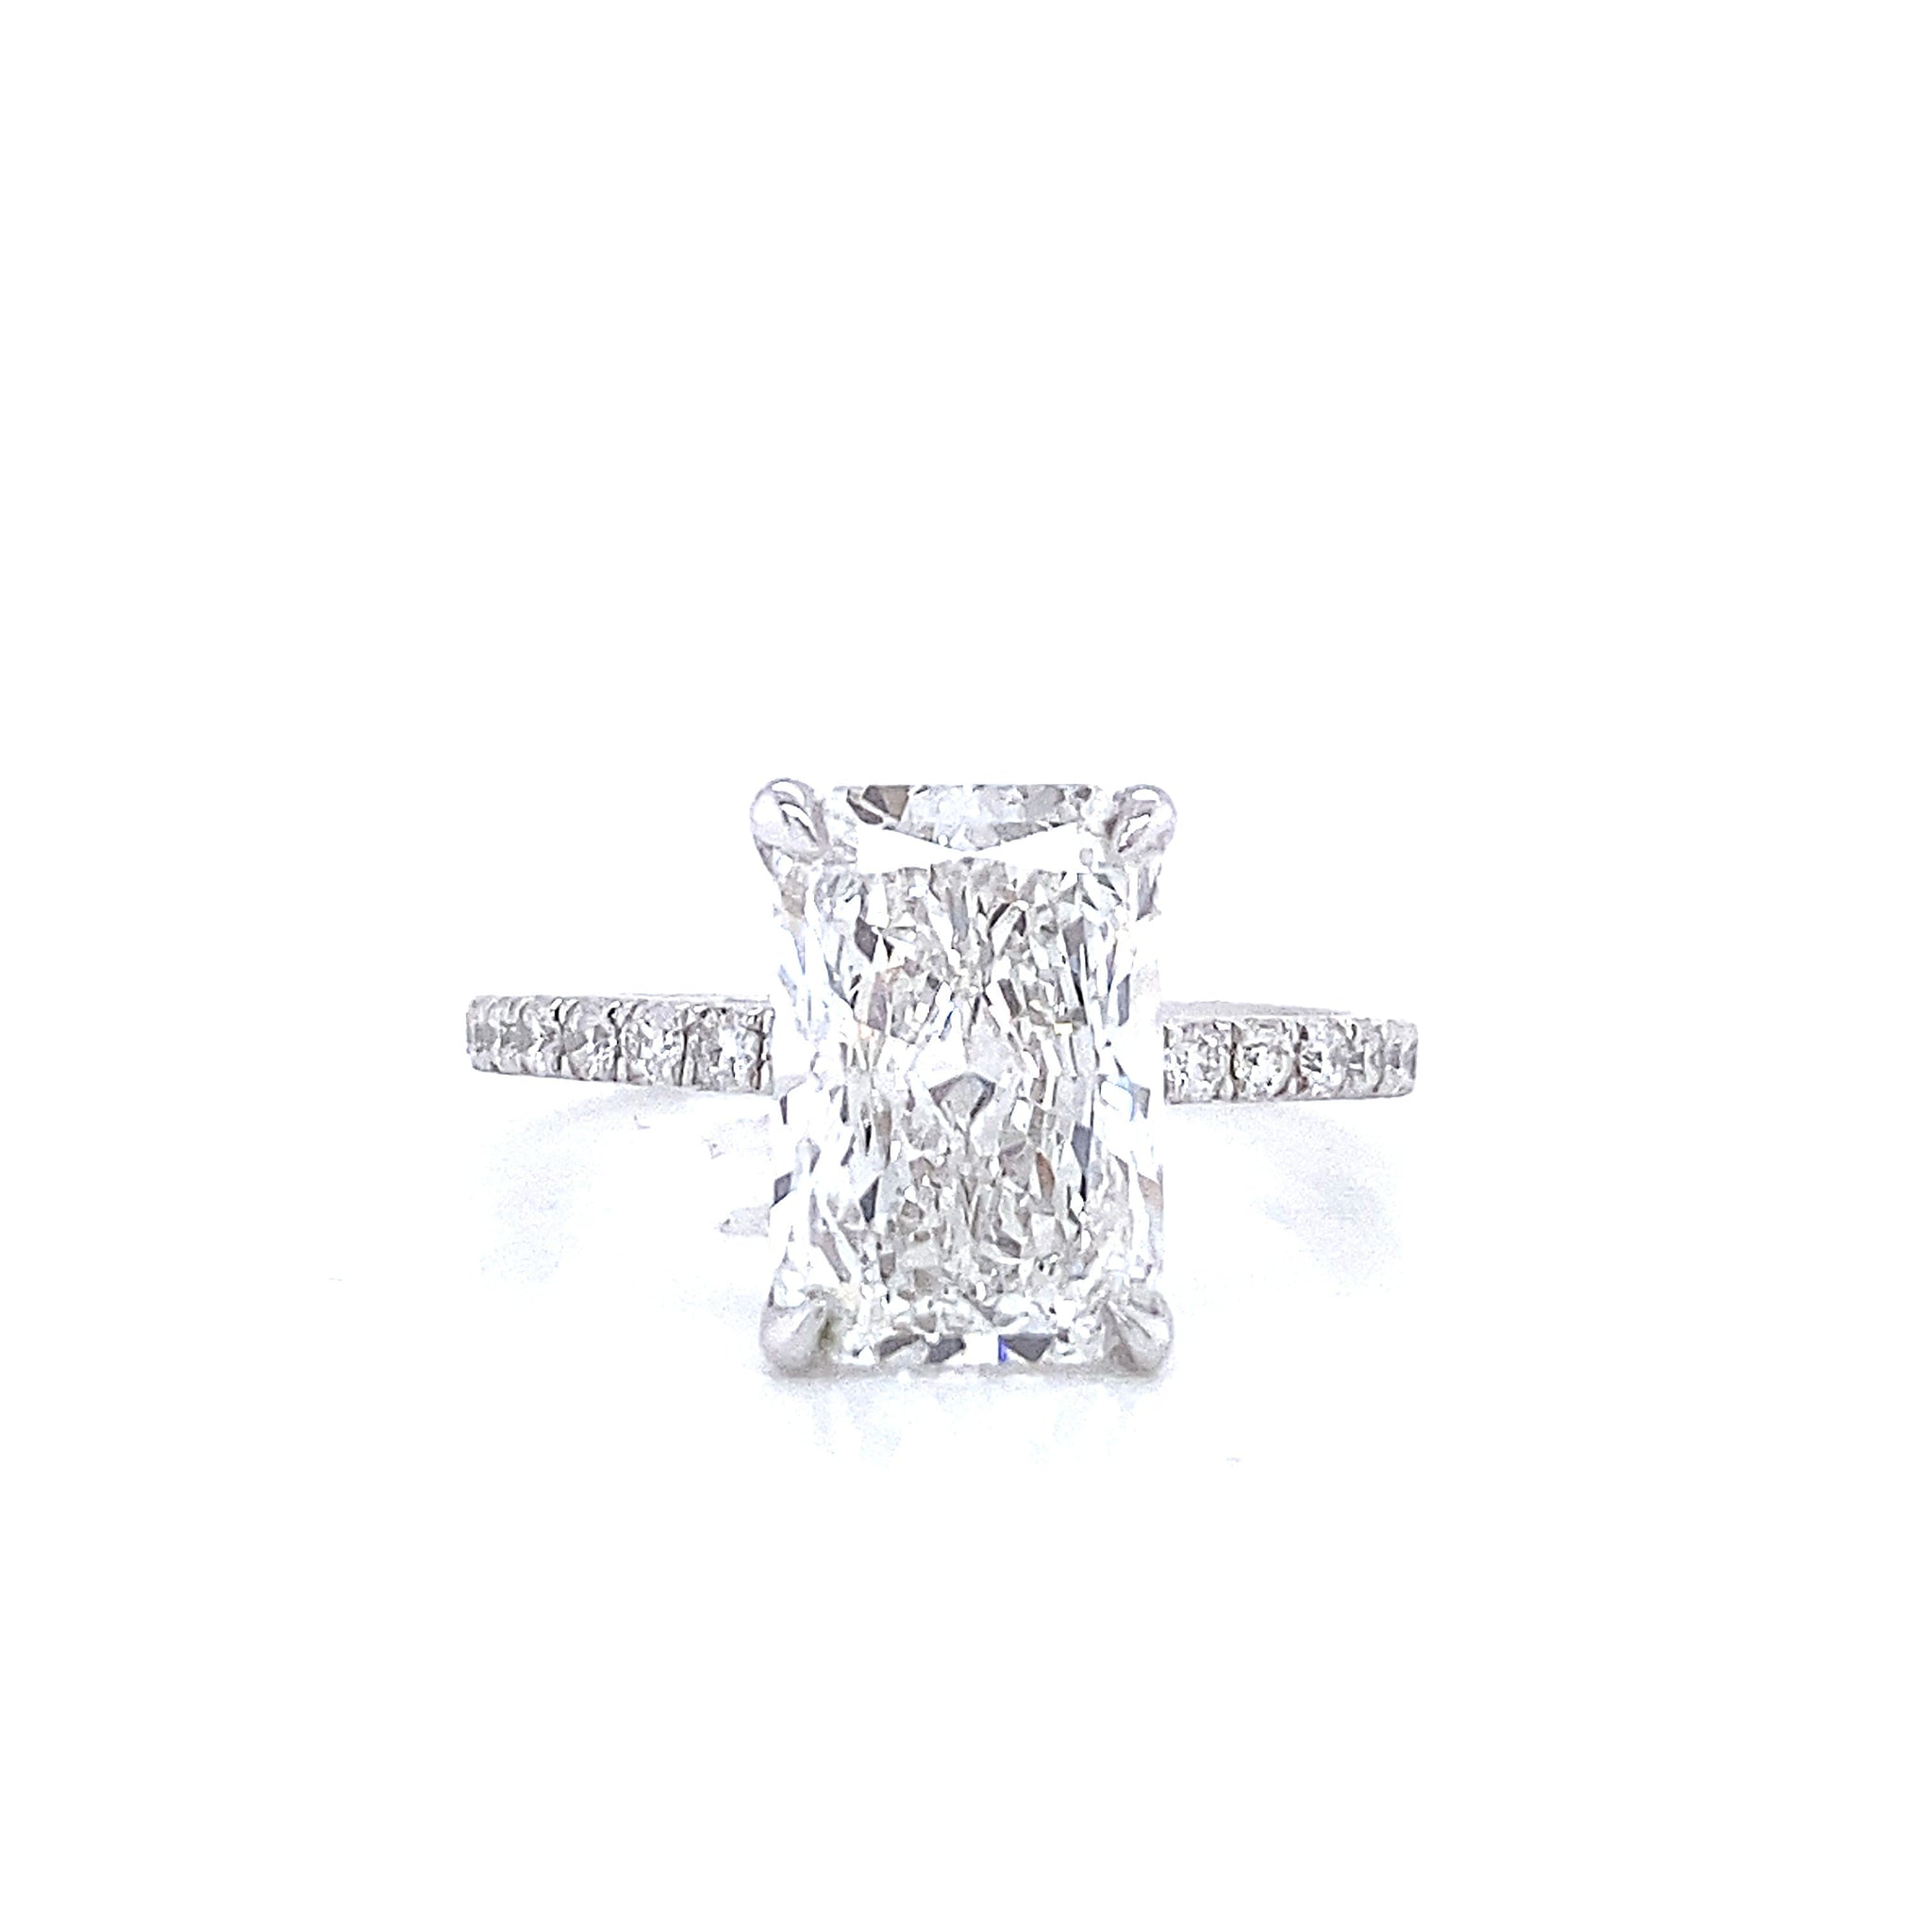 3 Carat Radiant Cut Diamond Engagement Ring IGI Certified